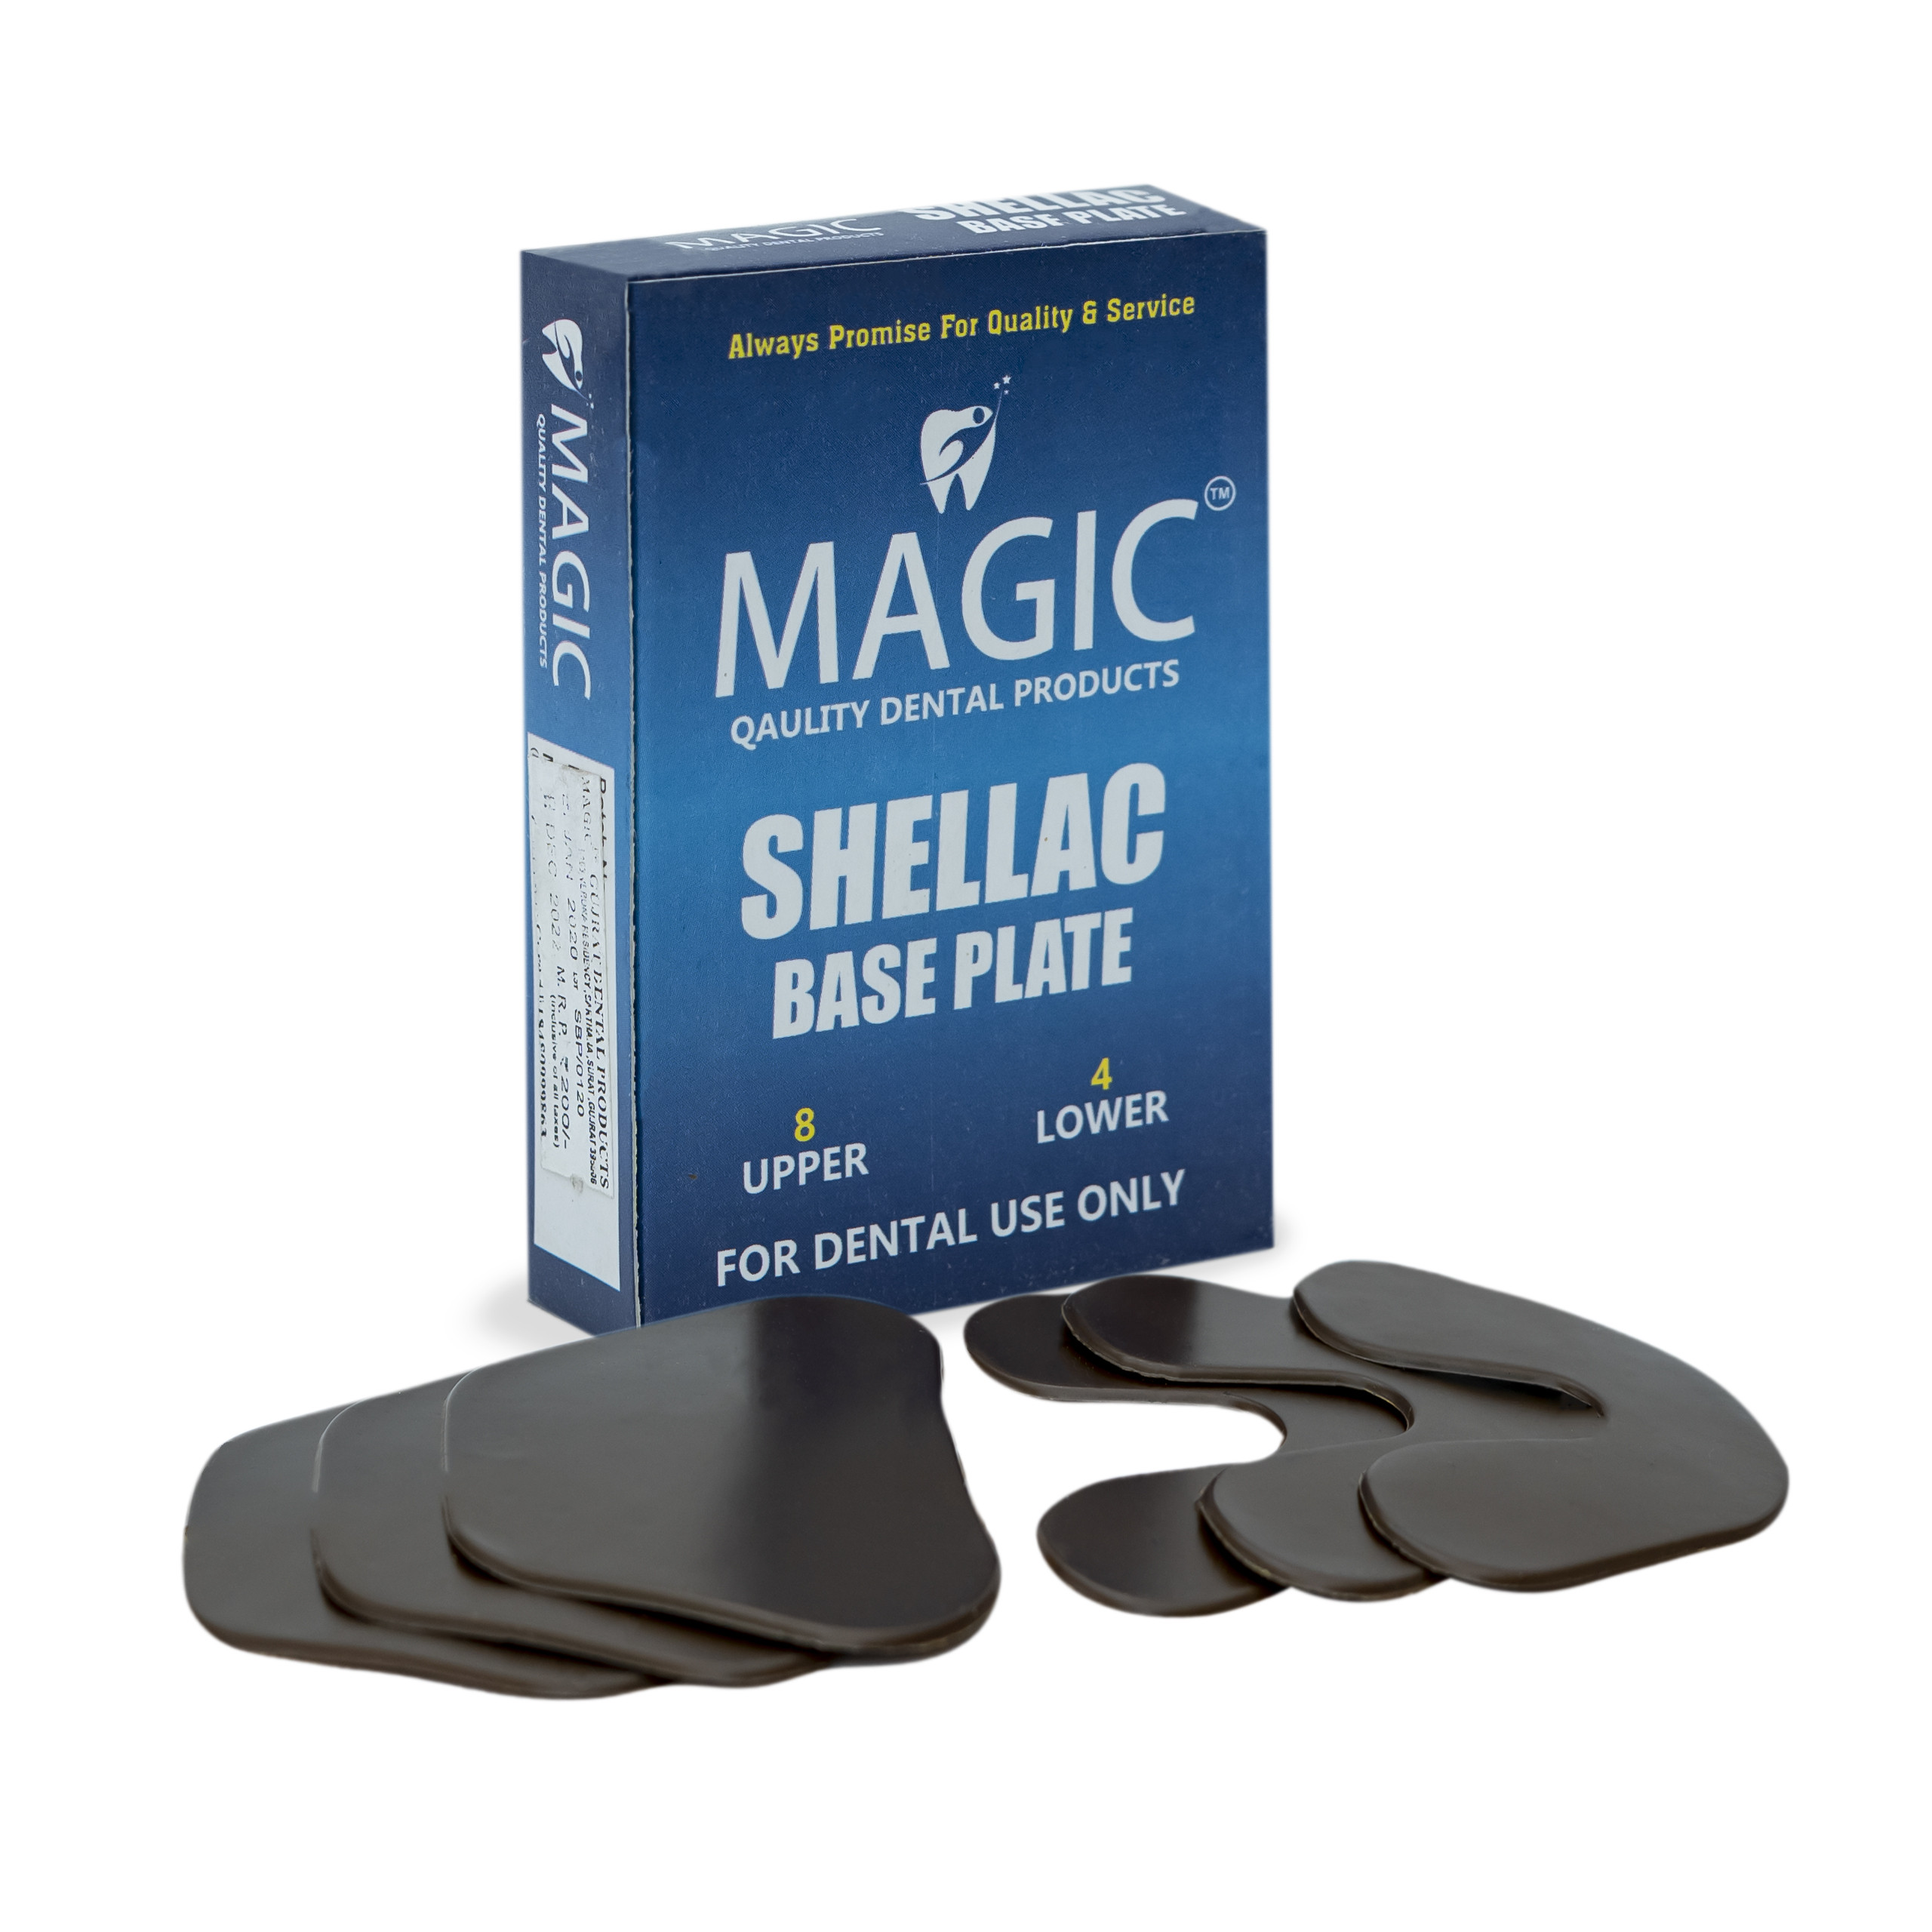 Magic Shellac Base Plate